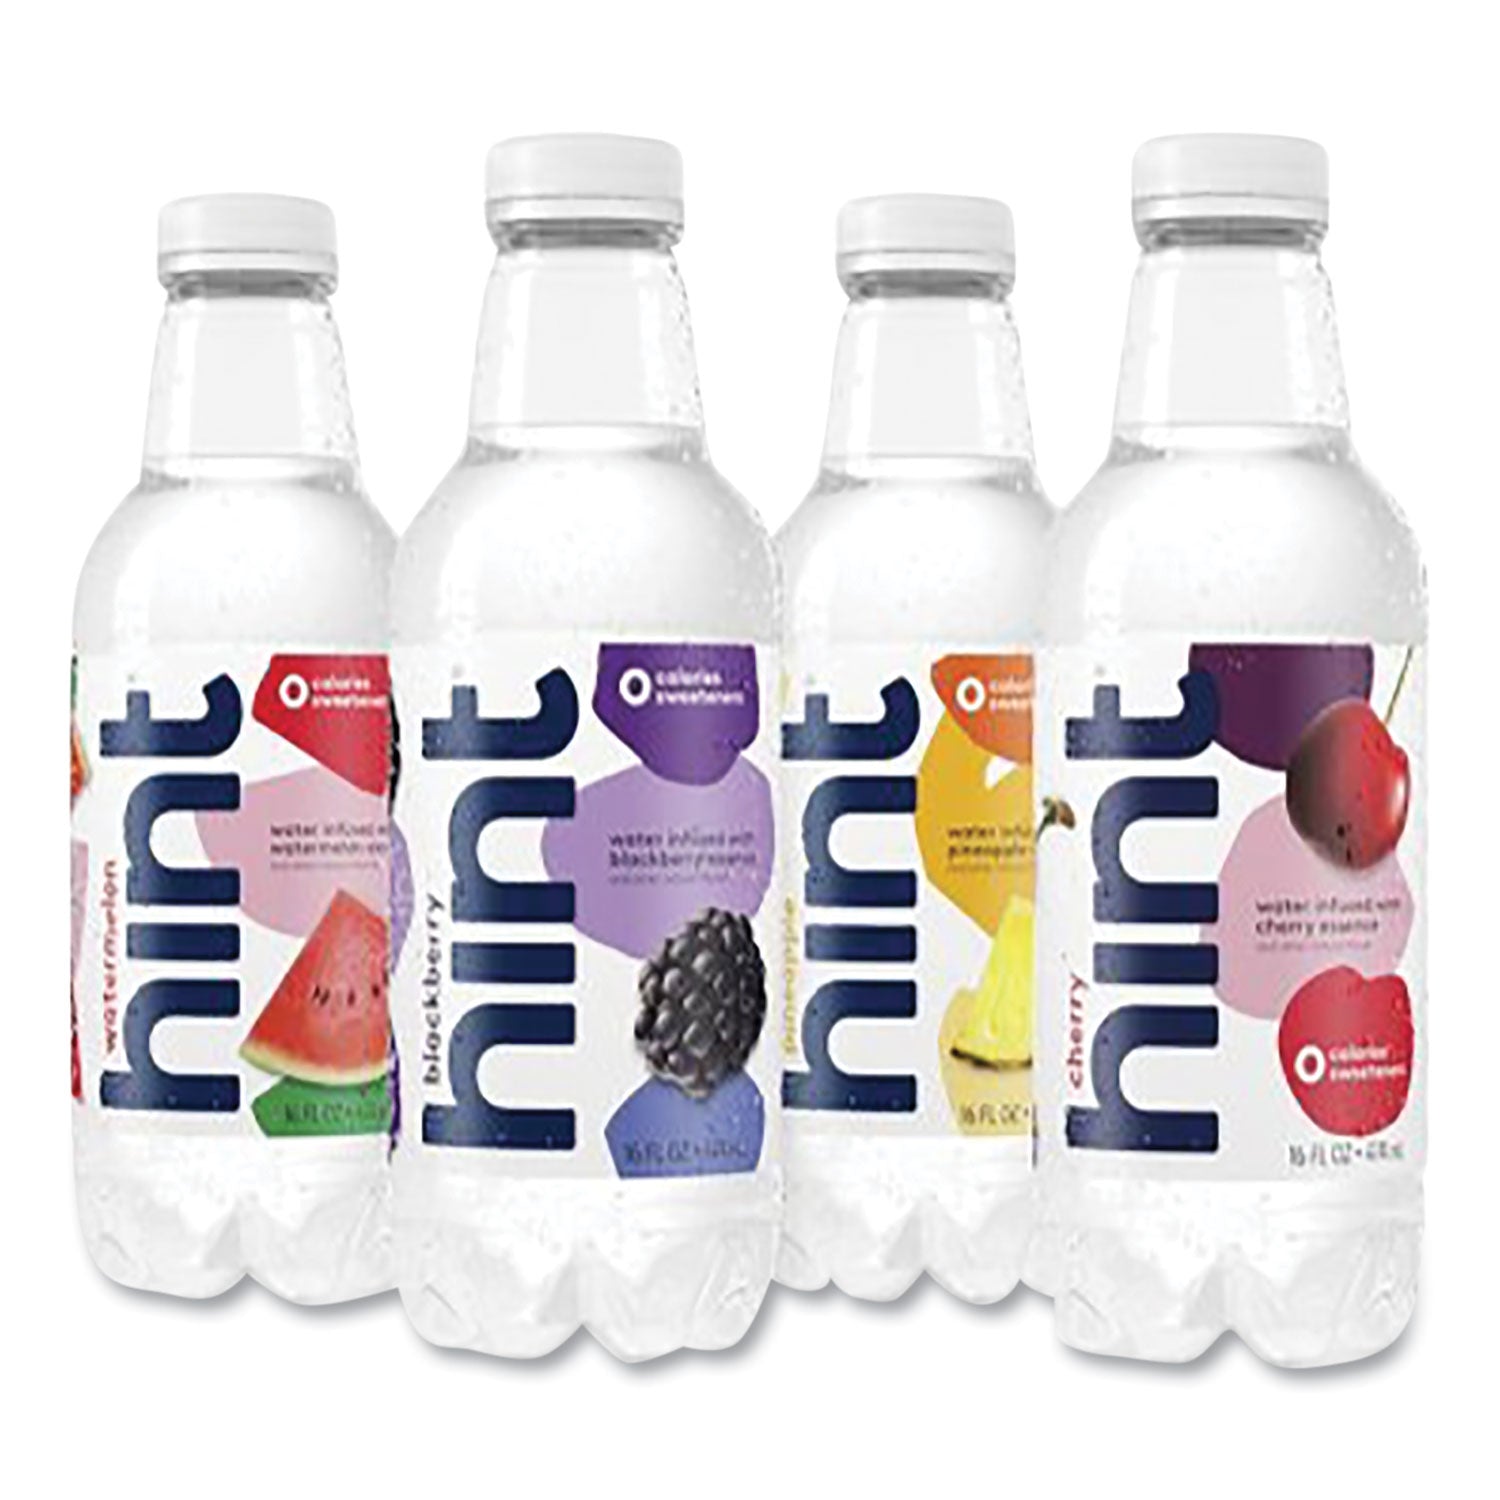 flavored-water-variety-pack-3-blackberry-3-cherry-3-pineapple-3-watermelon-16-oz-bottle-12-bottles-carton_hin00149 - 2